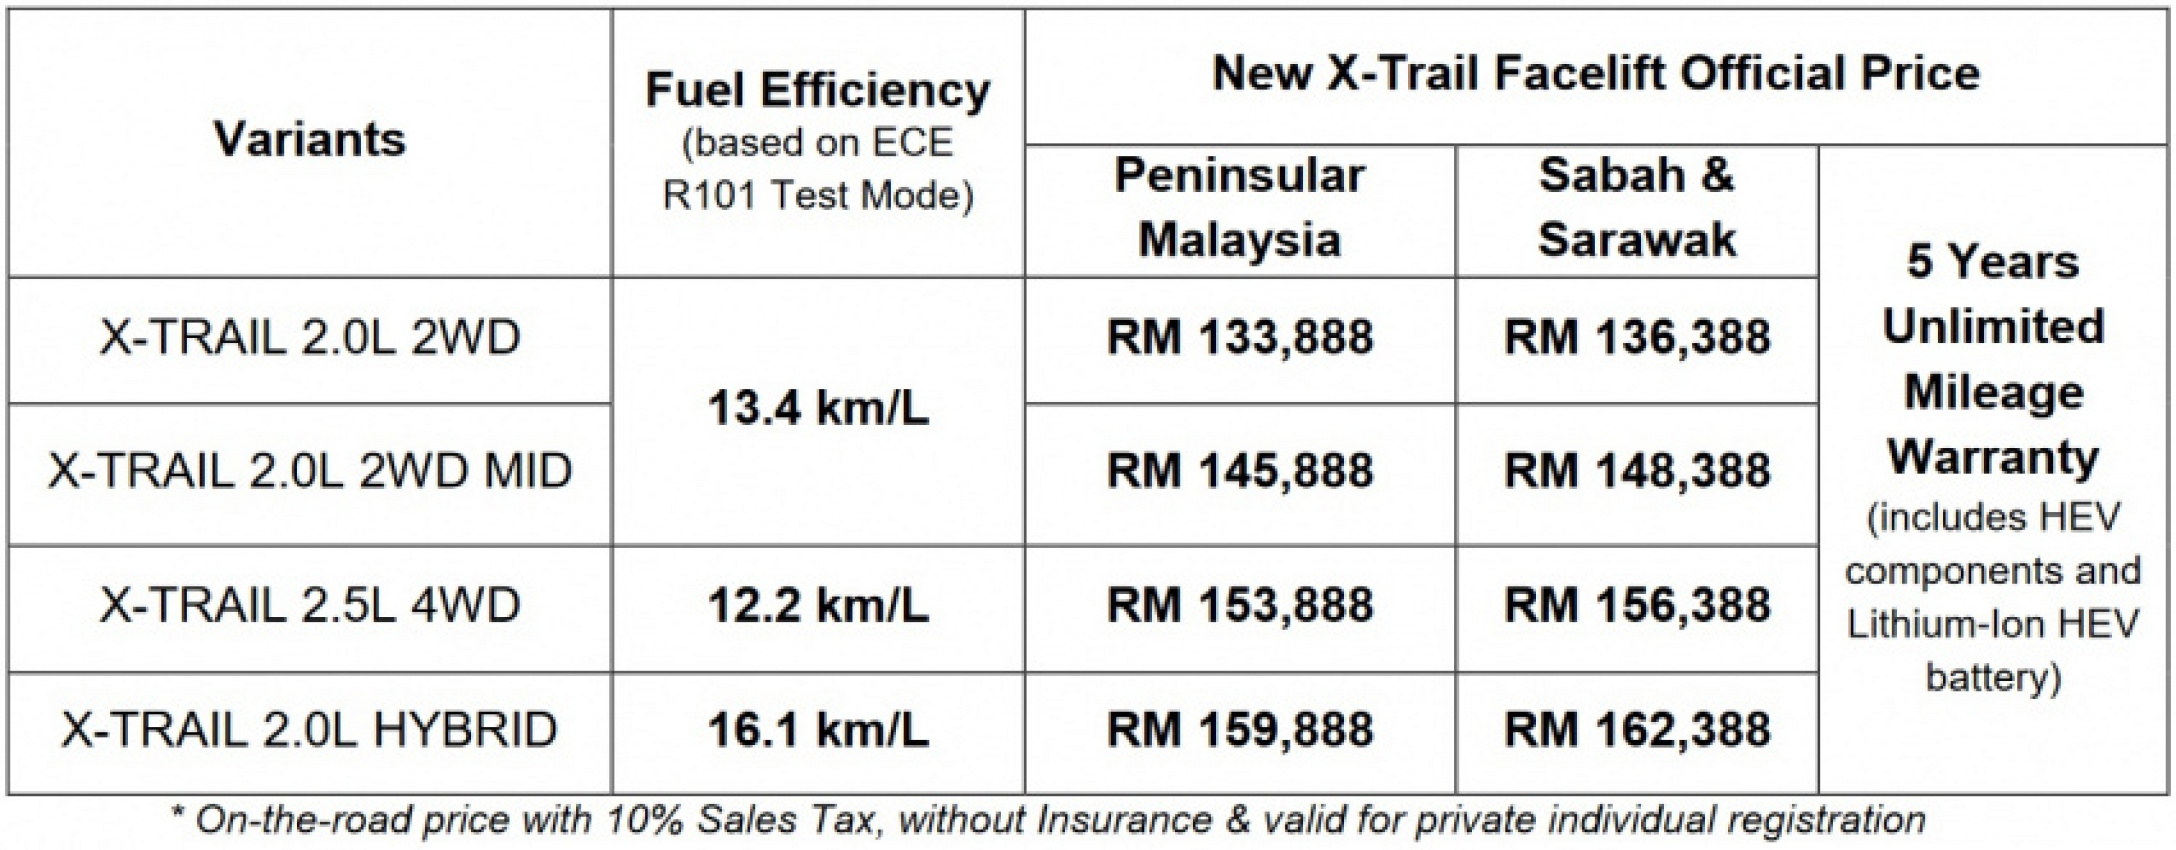 autos, car brands, cars, nissan, automotive, edaran tan chong motor, etcm, facelift, hybrid, malaysia, nissan x-trail, tan chong, official nissan x-trail facelift prices revealed